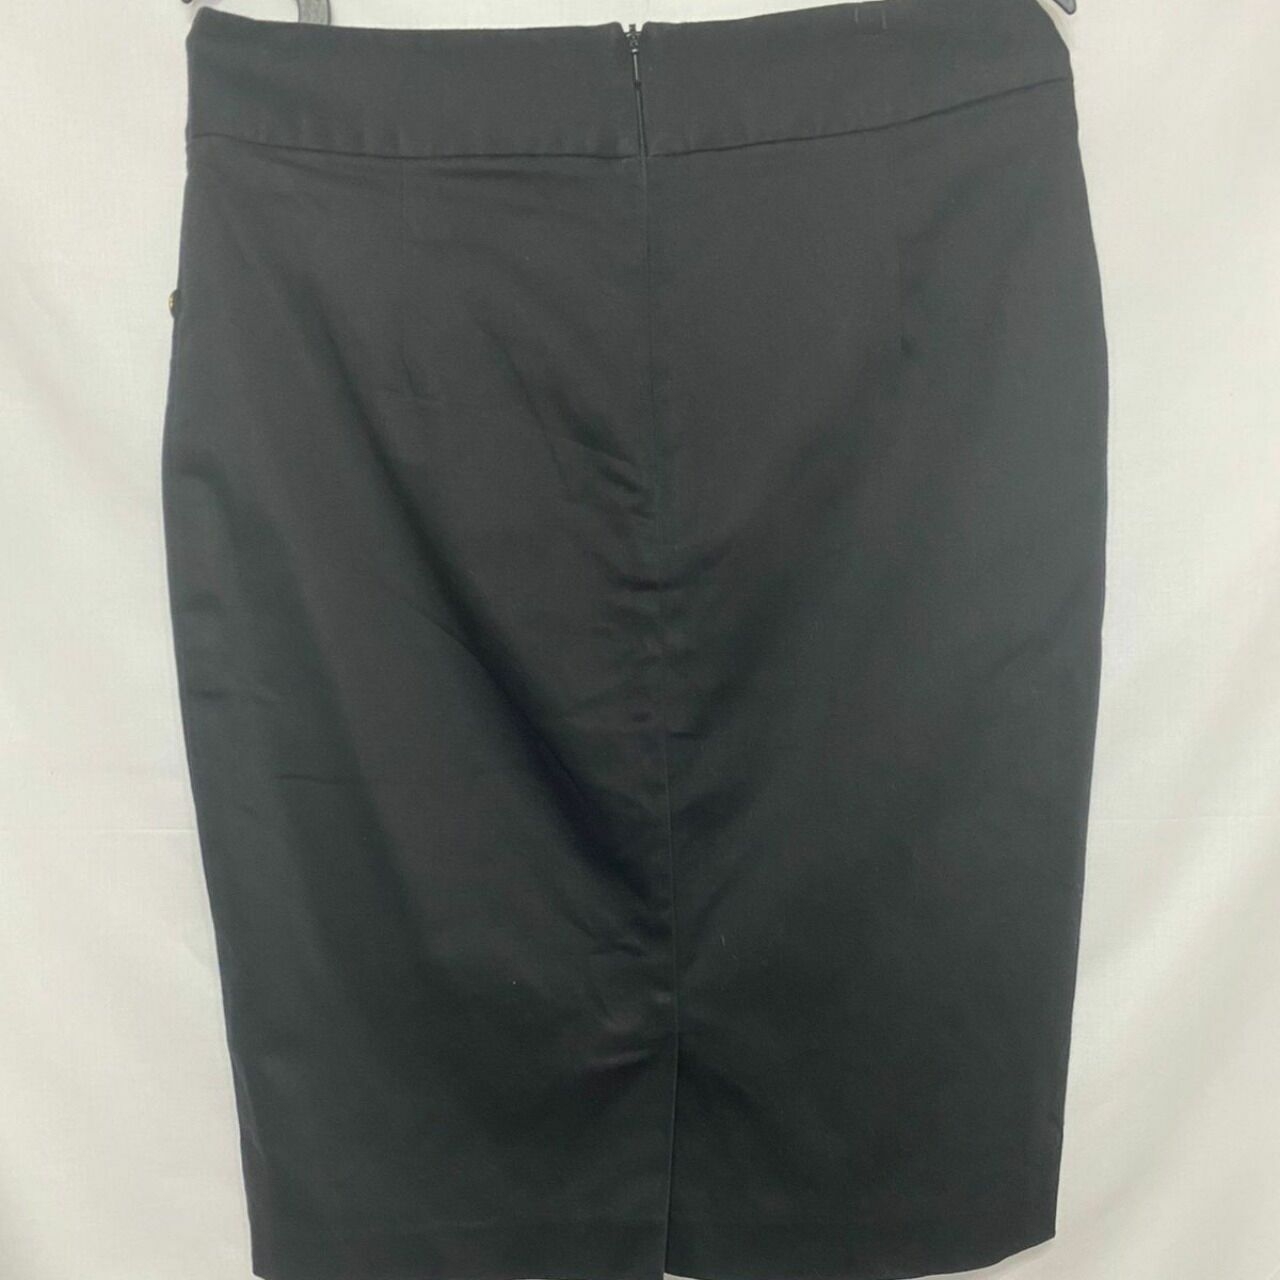 The Executive Black Midi Skirt